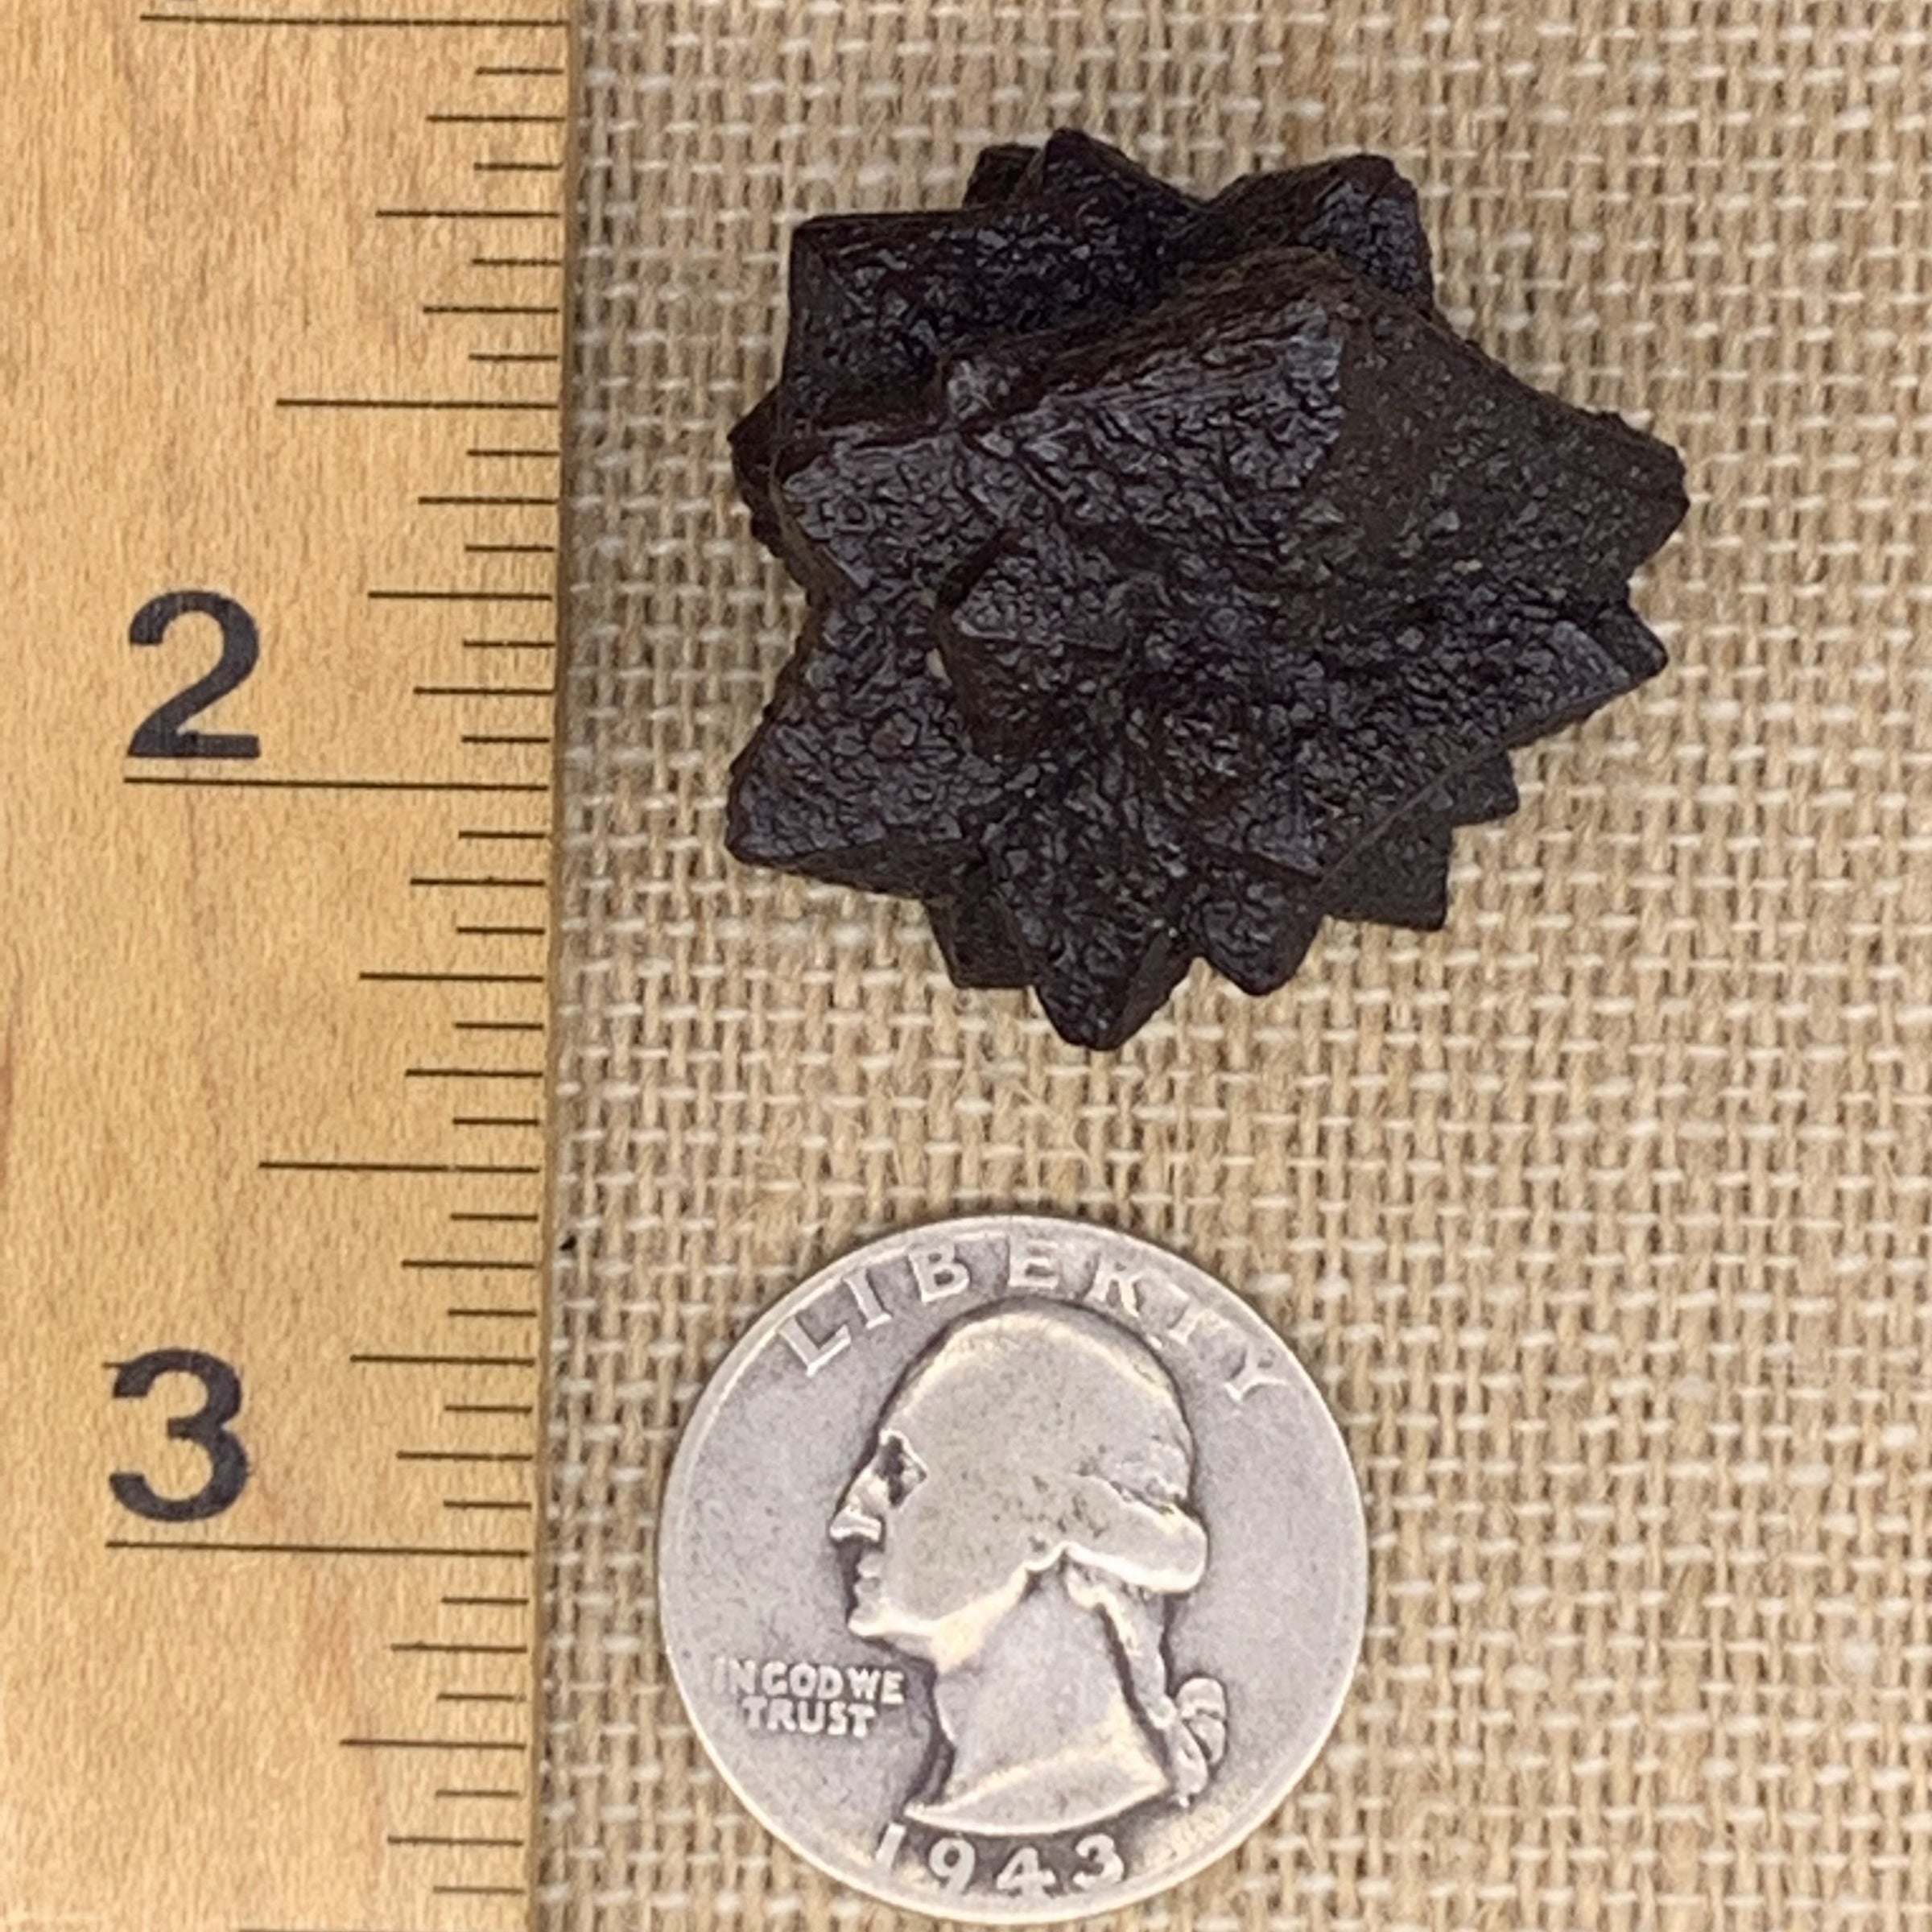 Prophecy Stone 31.3 grams-Moldavite Life